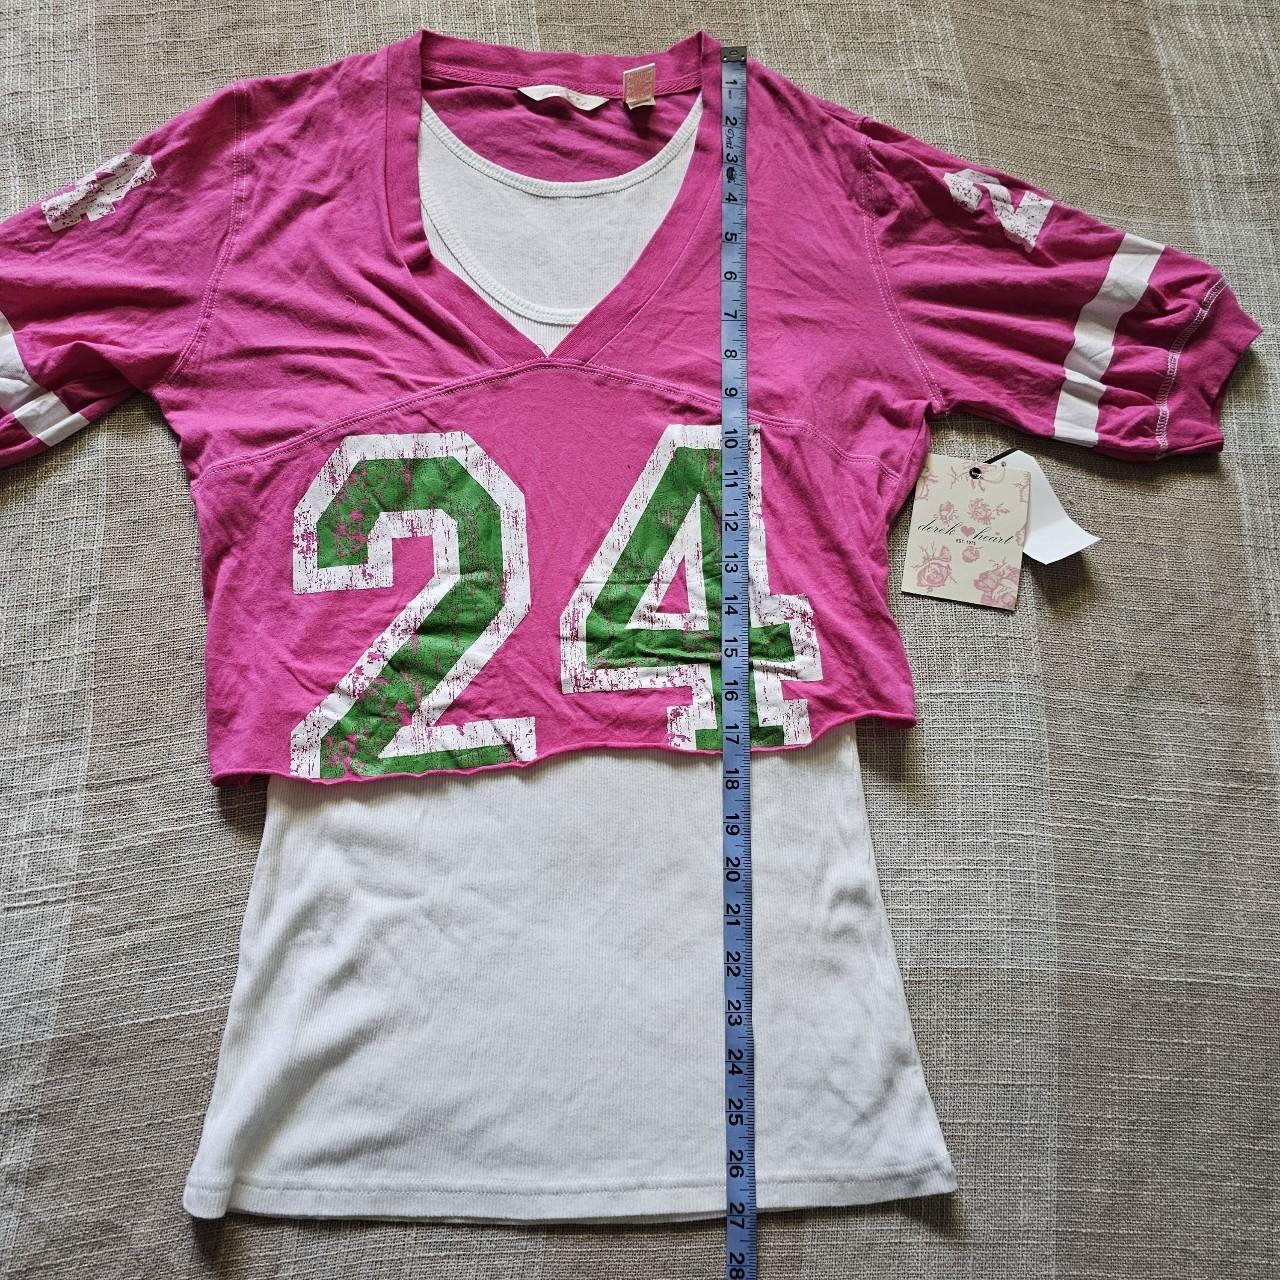 Brand: Derek Heart pink and black #10 jersey sz M - Depop